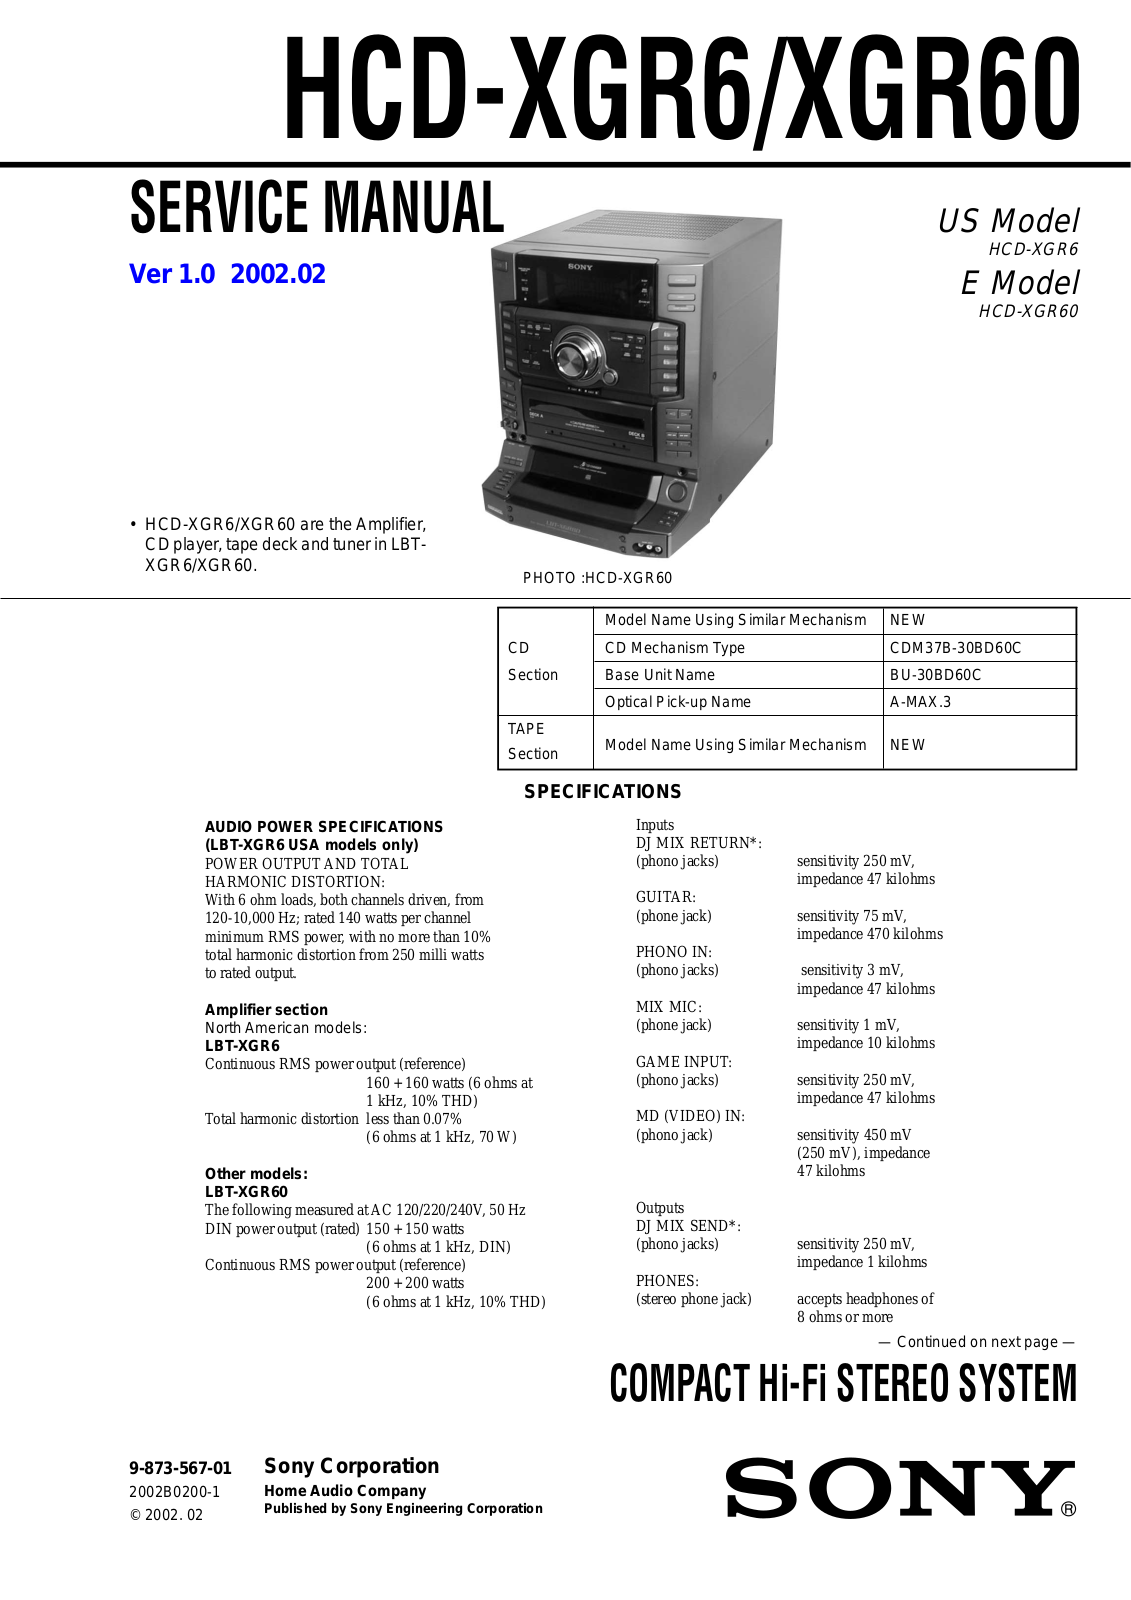 Sony HCD-XGR60, HCD-XGR6 Service Manual